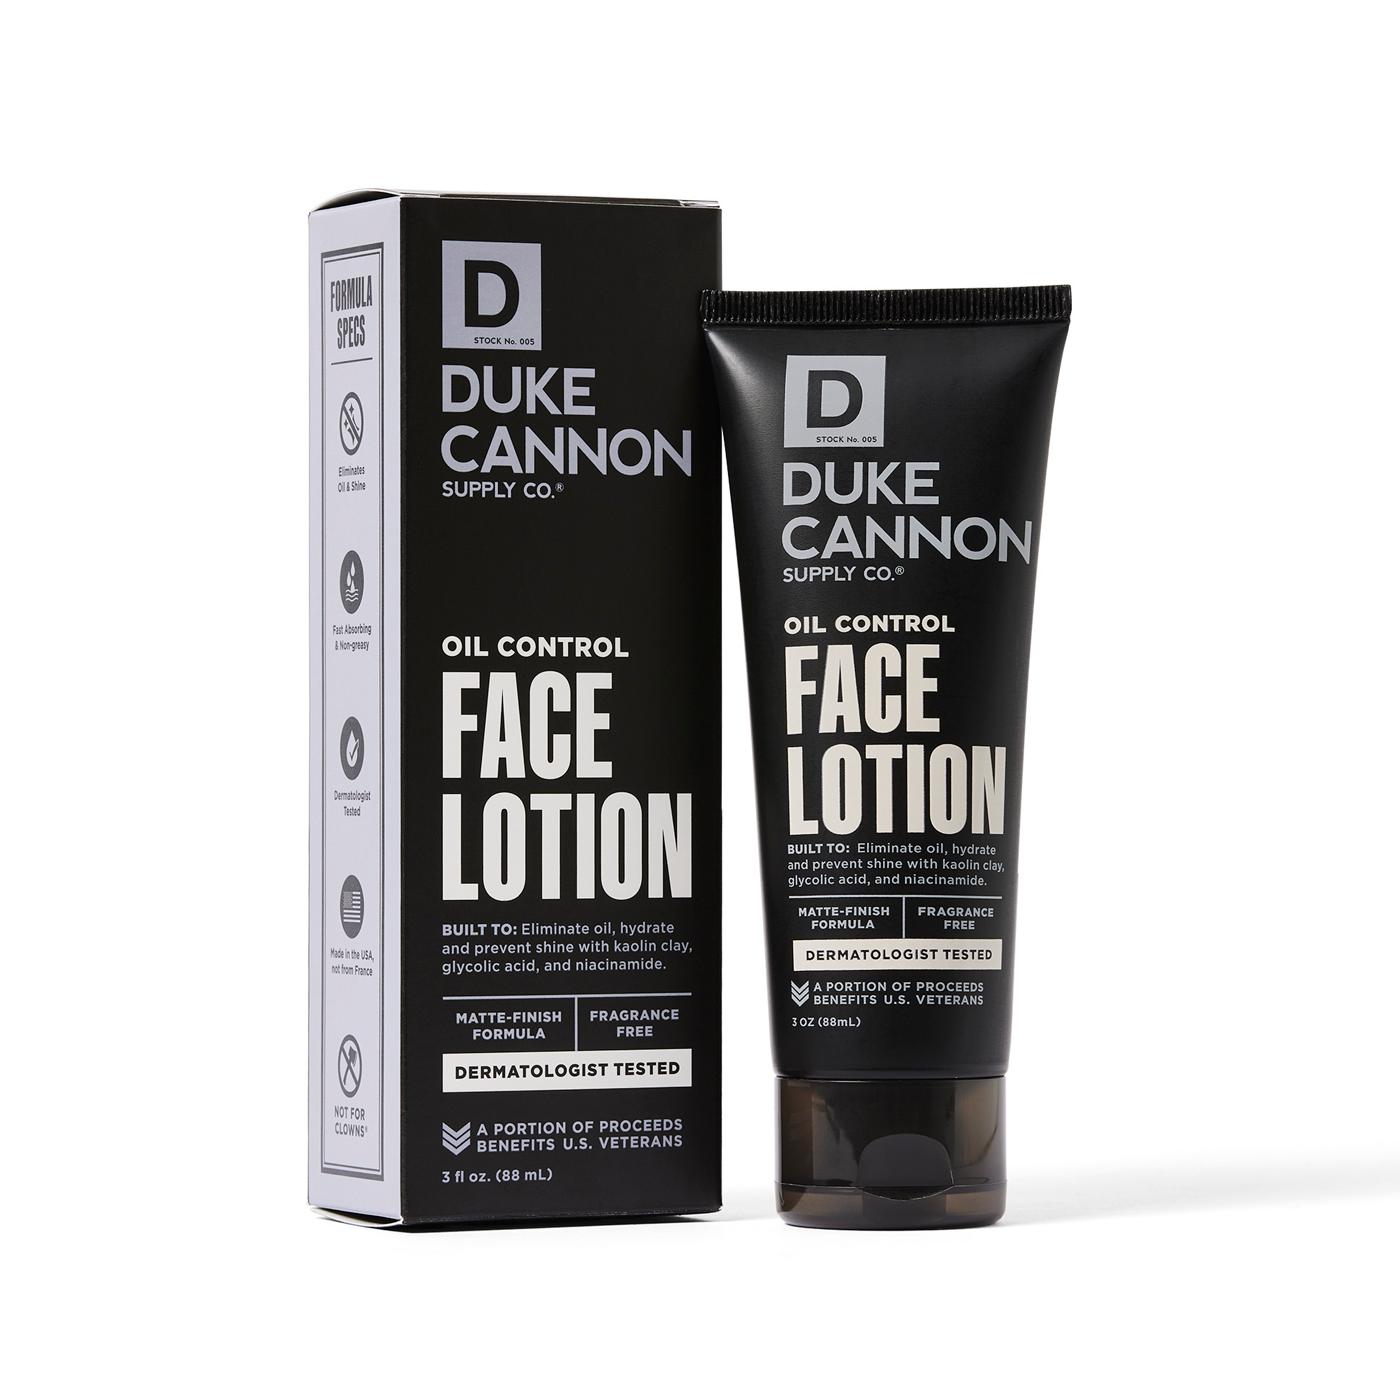 Duke Cannon Oil Control Face Lotion; image 4 of 4